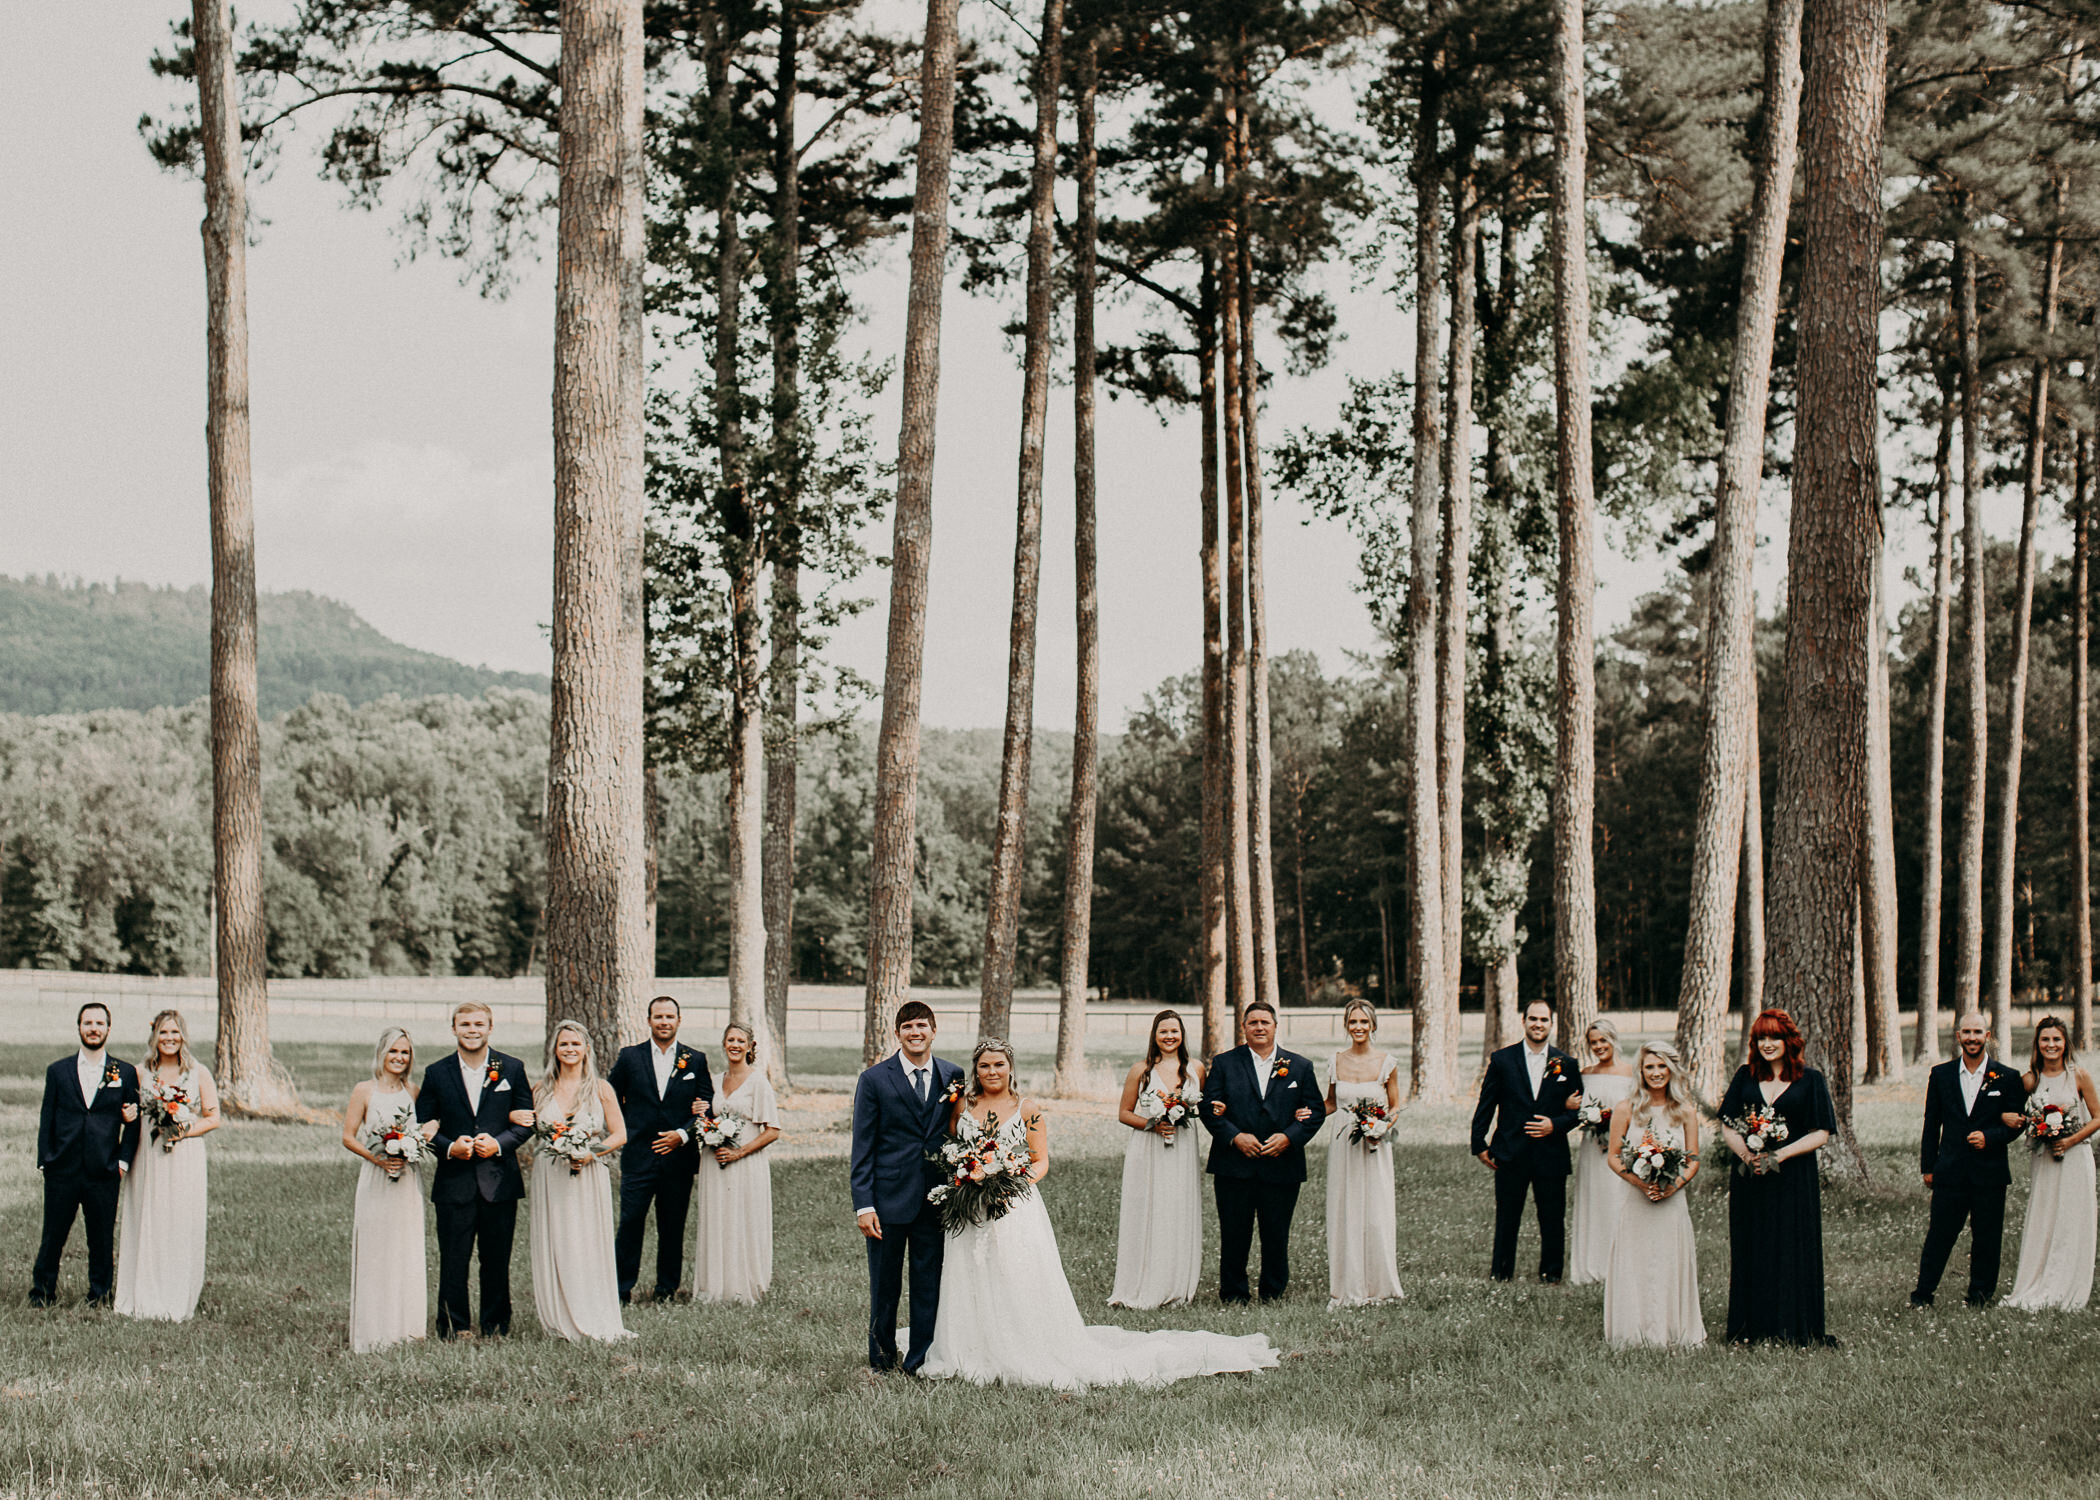 Atlanta_Wedding Day || The Farm at Rome-Ga, Aline Marin Photography46.jpg